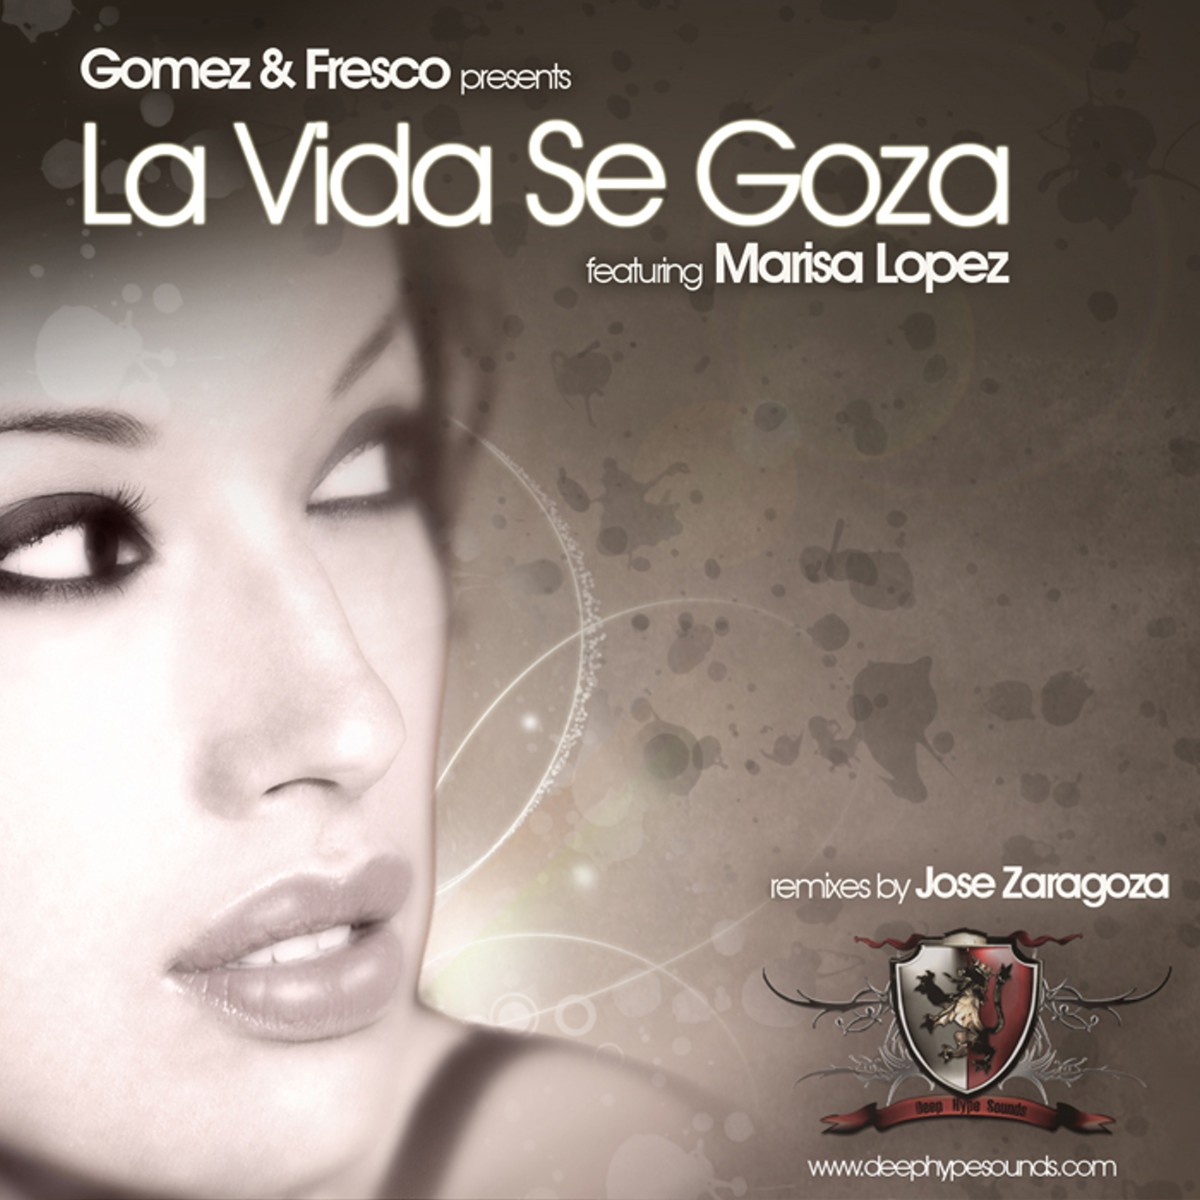 Gomes & Fresco - Adios, Ciao Goodbye (Dark and Dirty Remix) [Feat. Marisa Lopez] фото